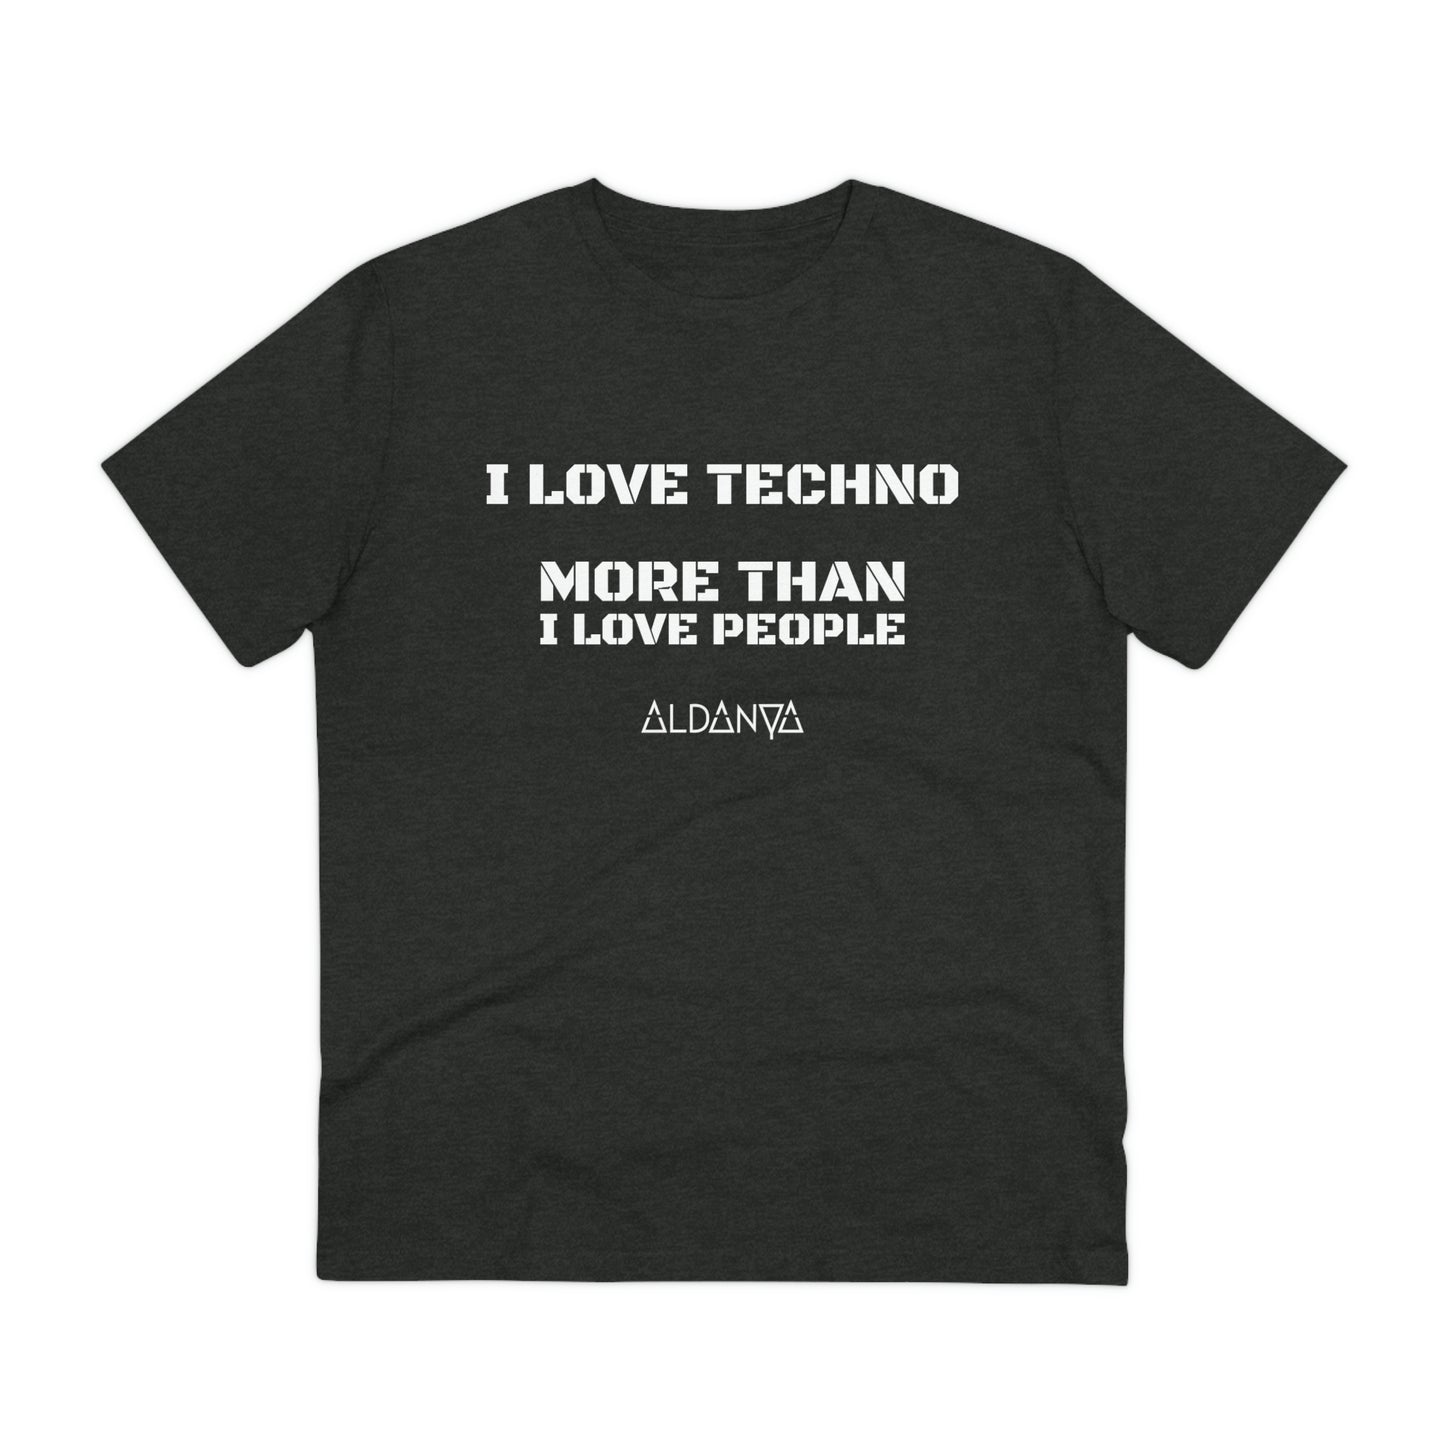 ALDANYA / I Love Techno More than People - Organic T-shirt Unisex